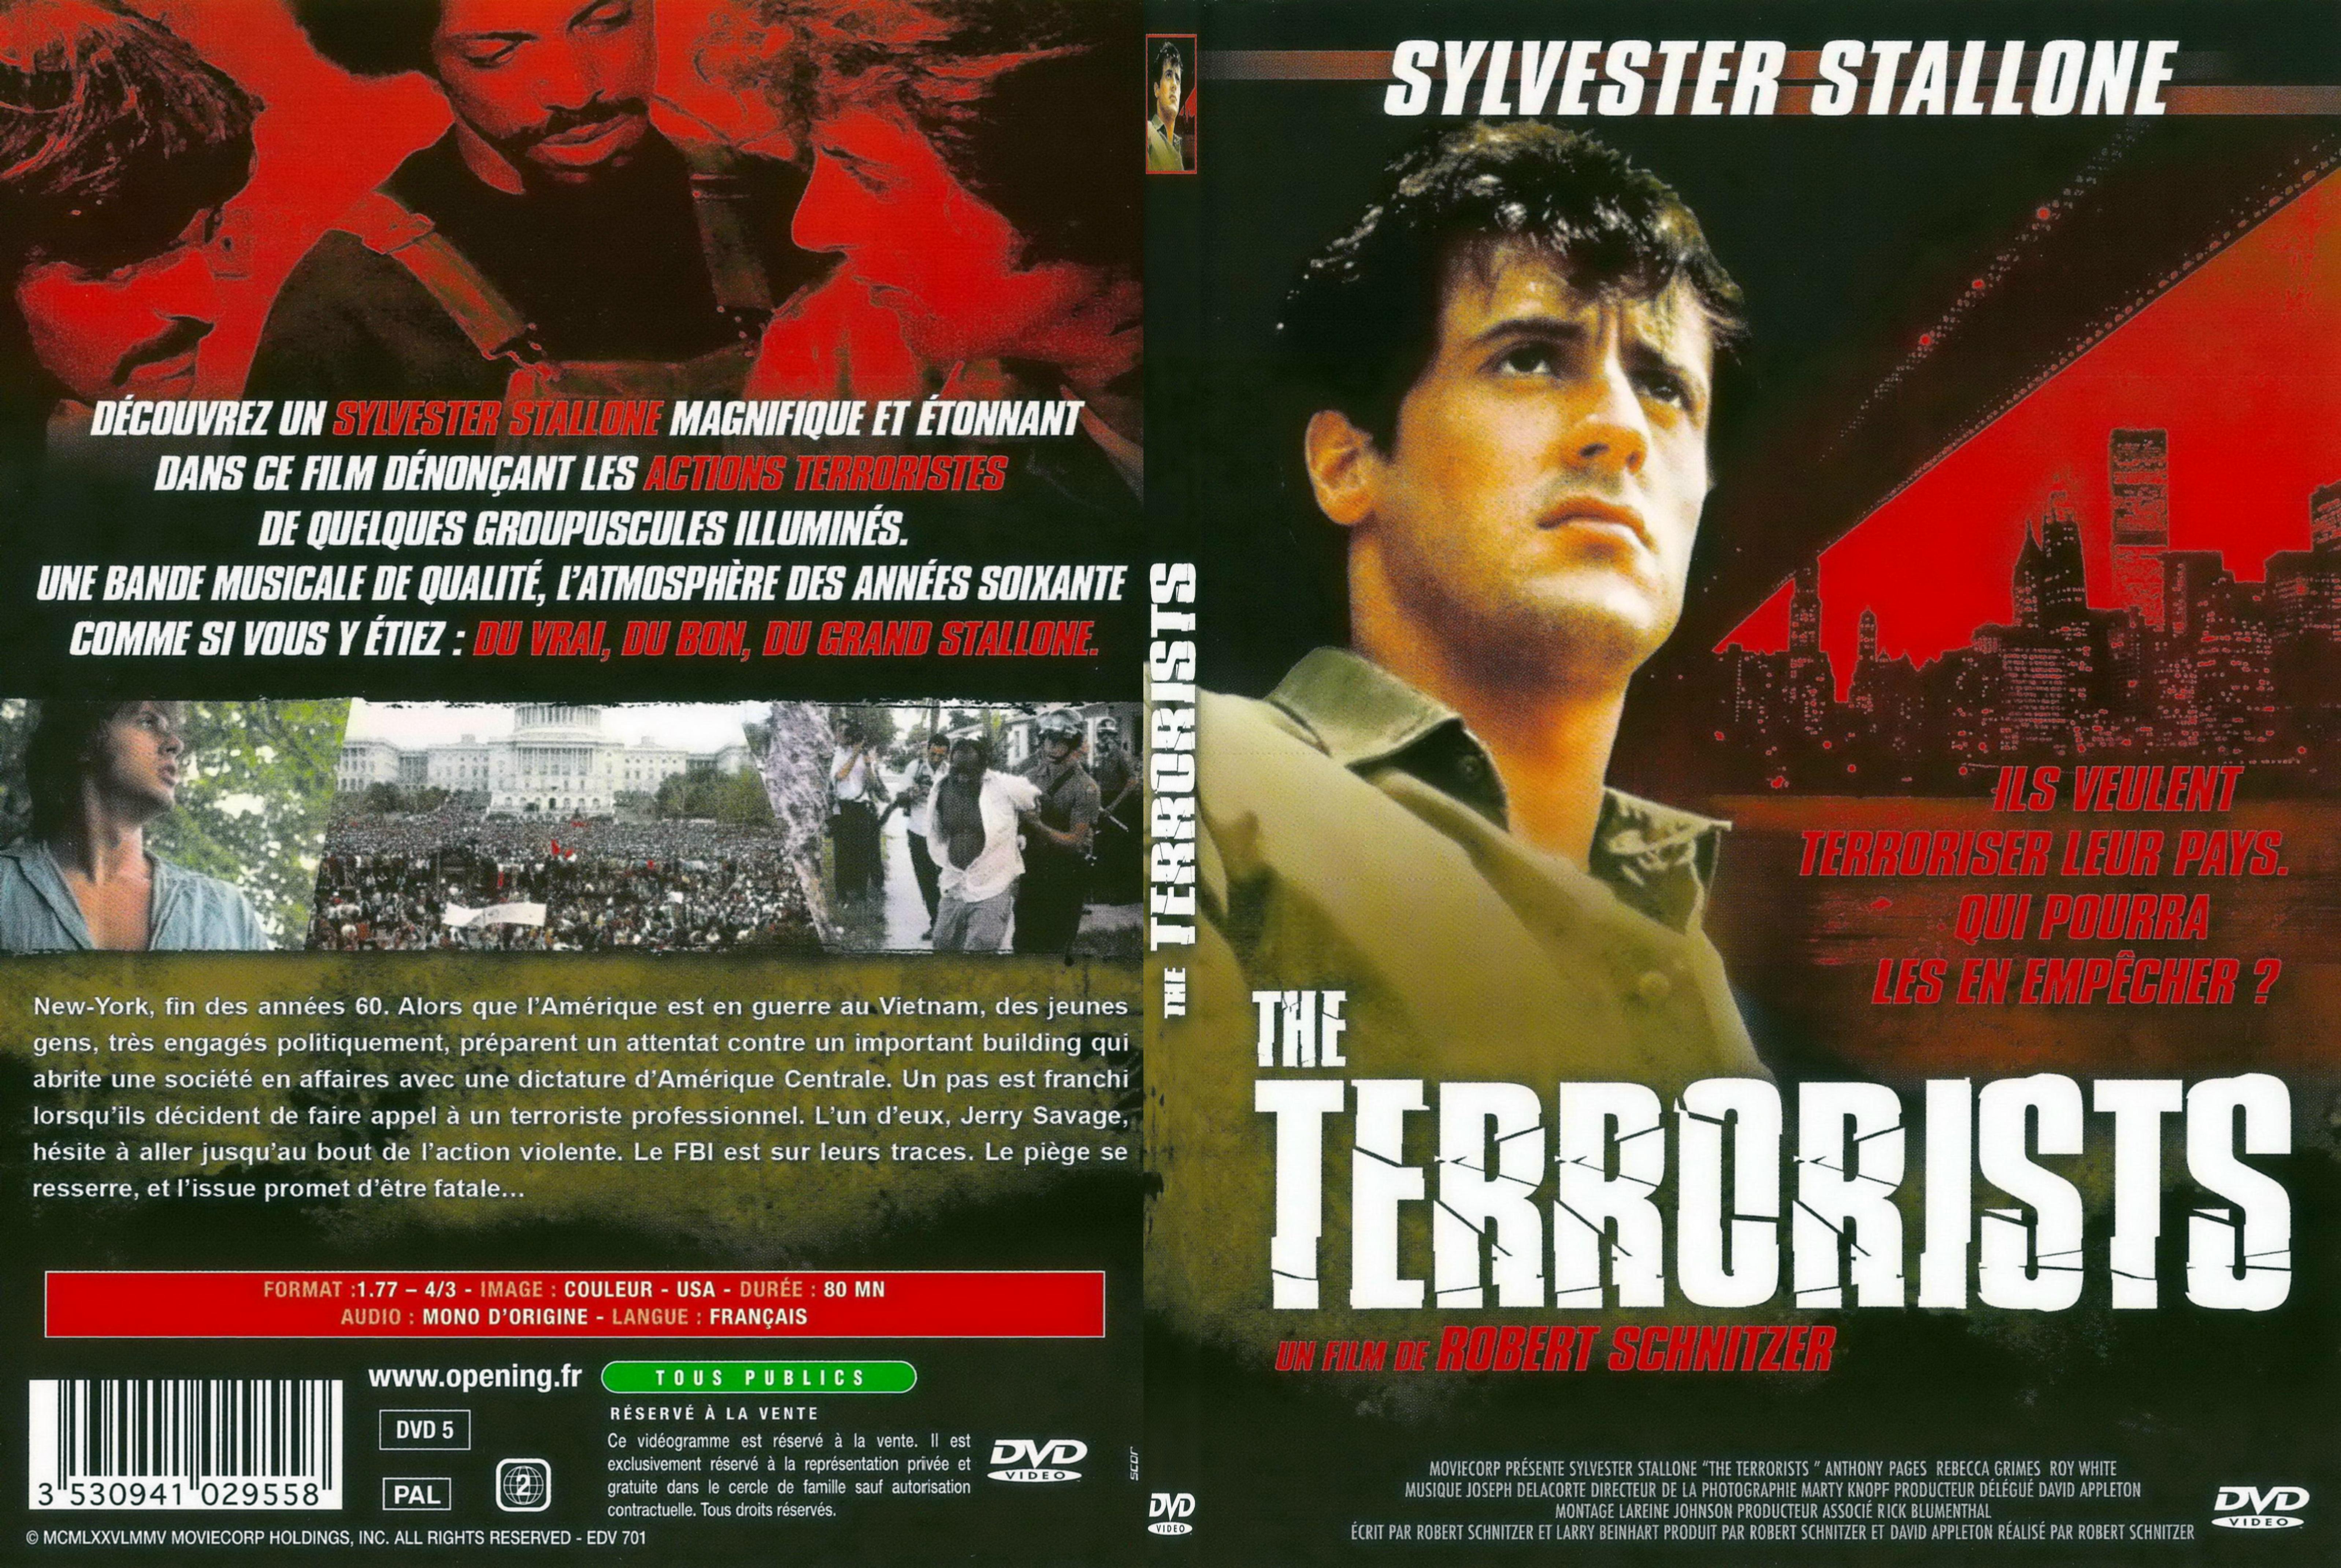 Jaquette DVD The terrorists - SLIM